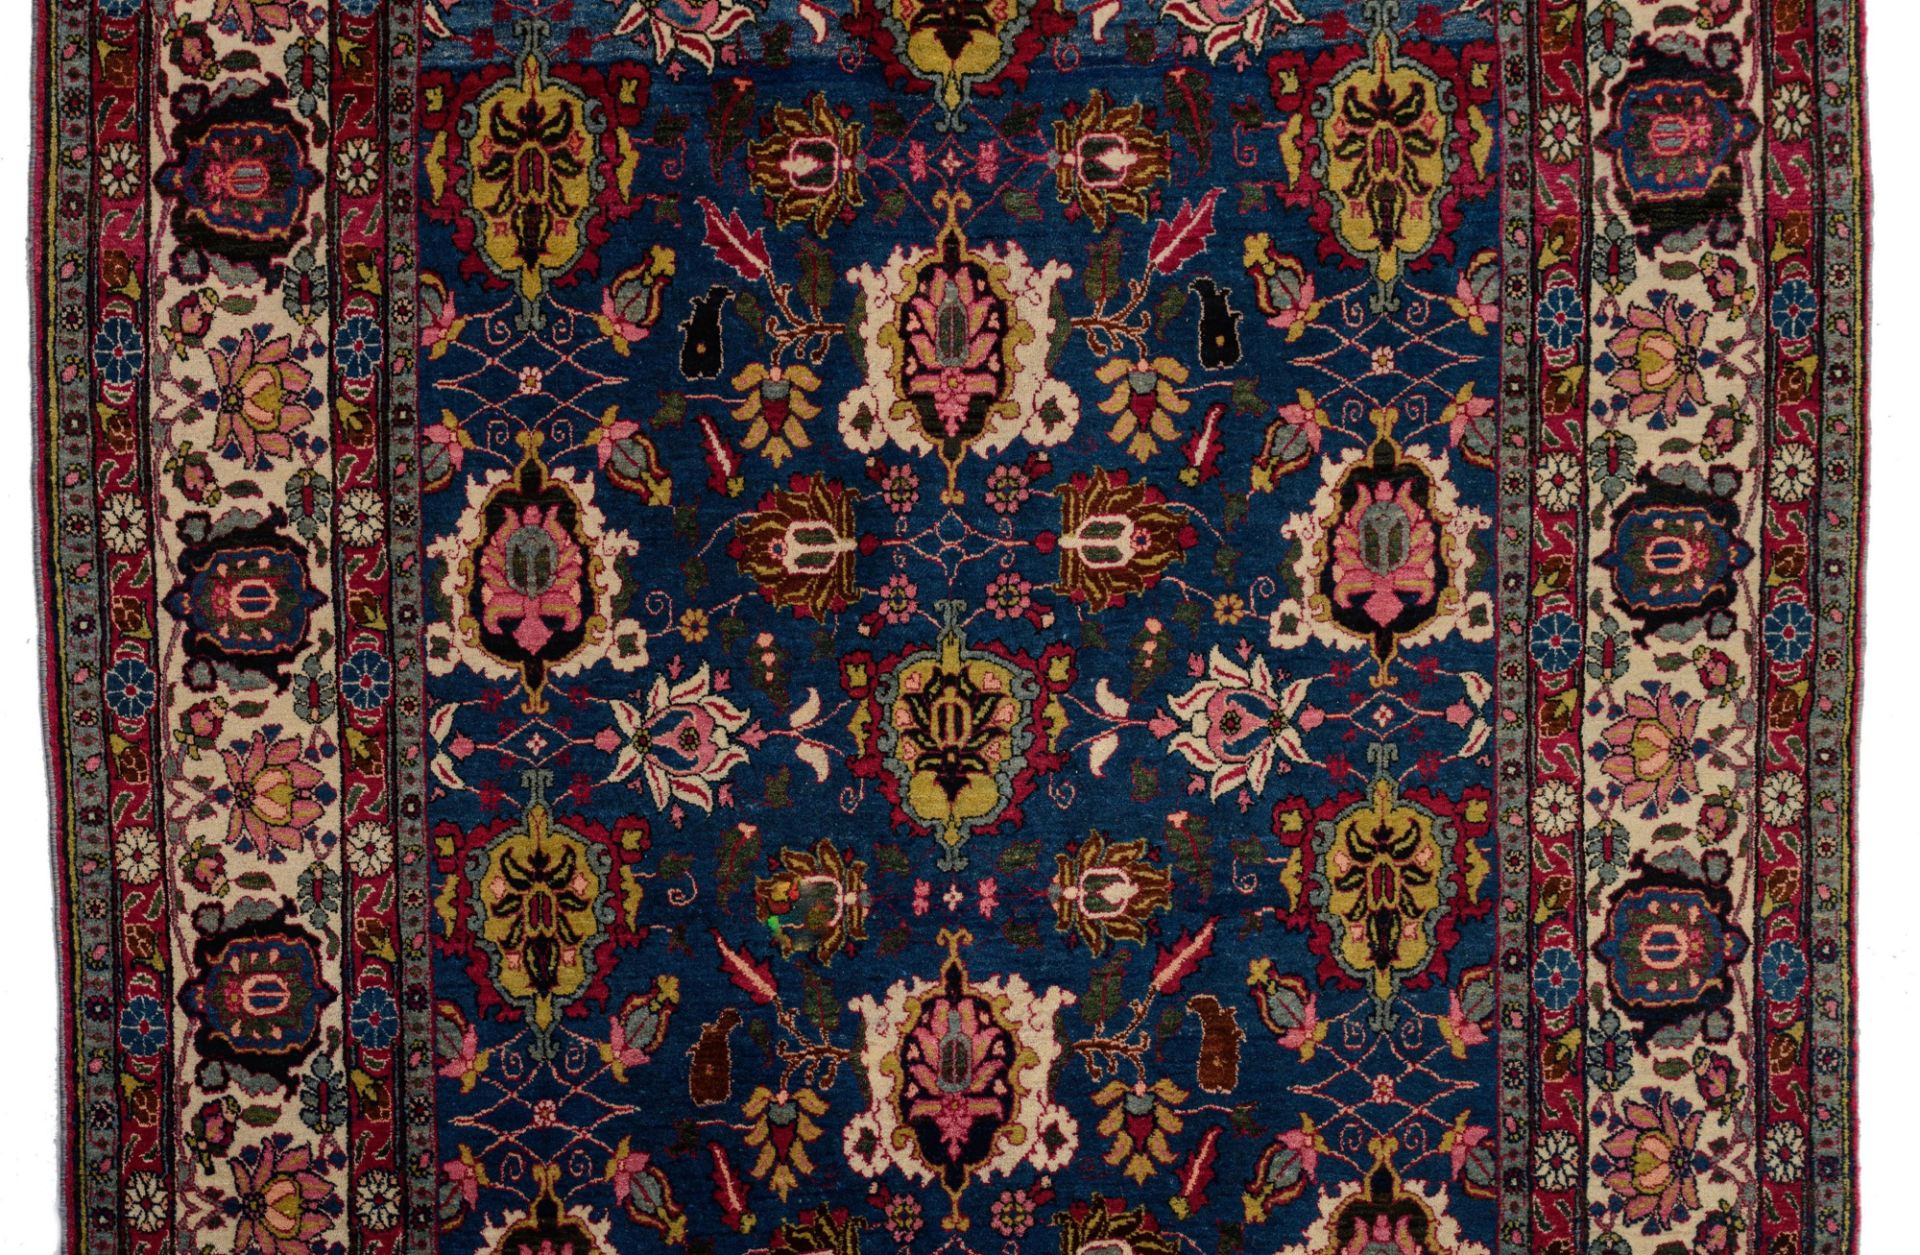 A Persian, Veranin rug, wool, 146 x 204 cm - Image 5 of 5